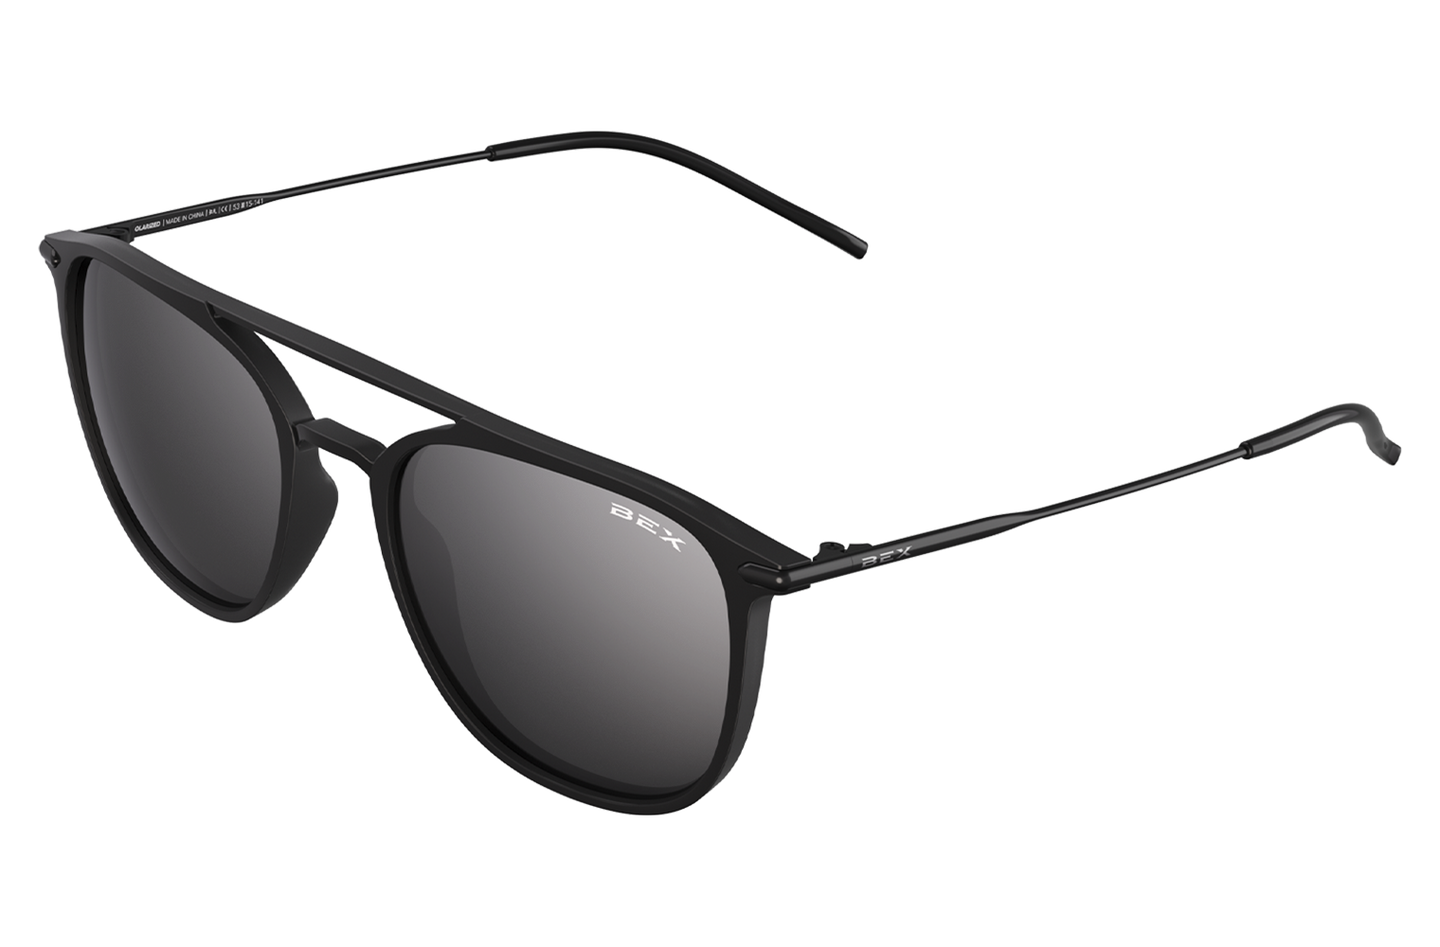 Bex Sunglasses - Dillinger (Black/Gray)